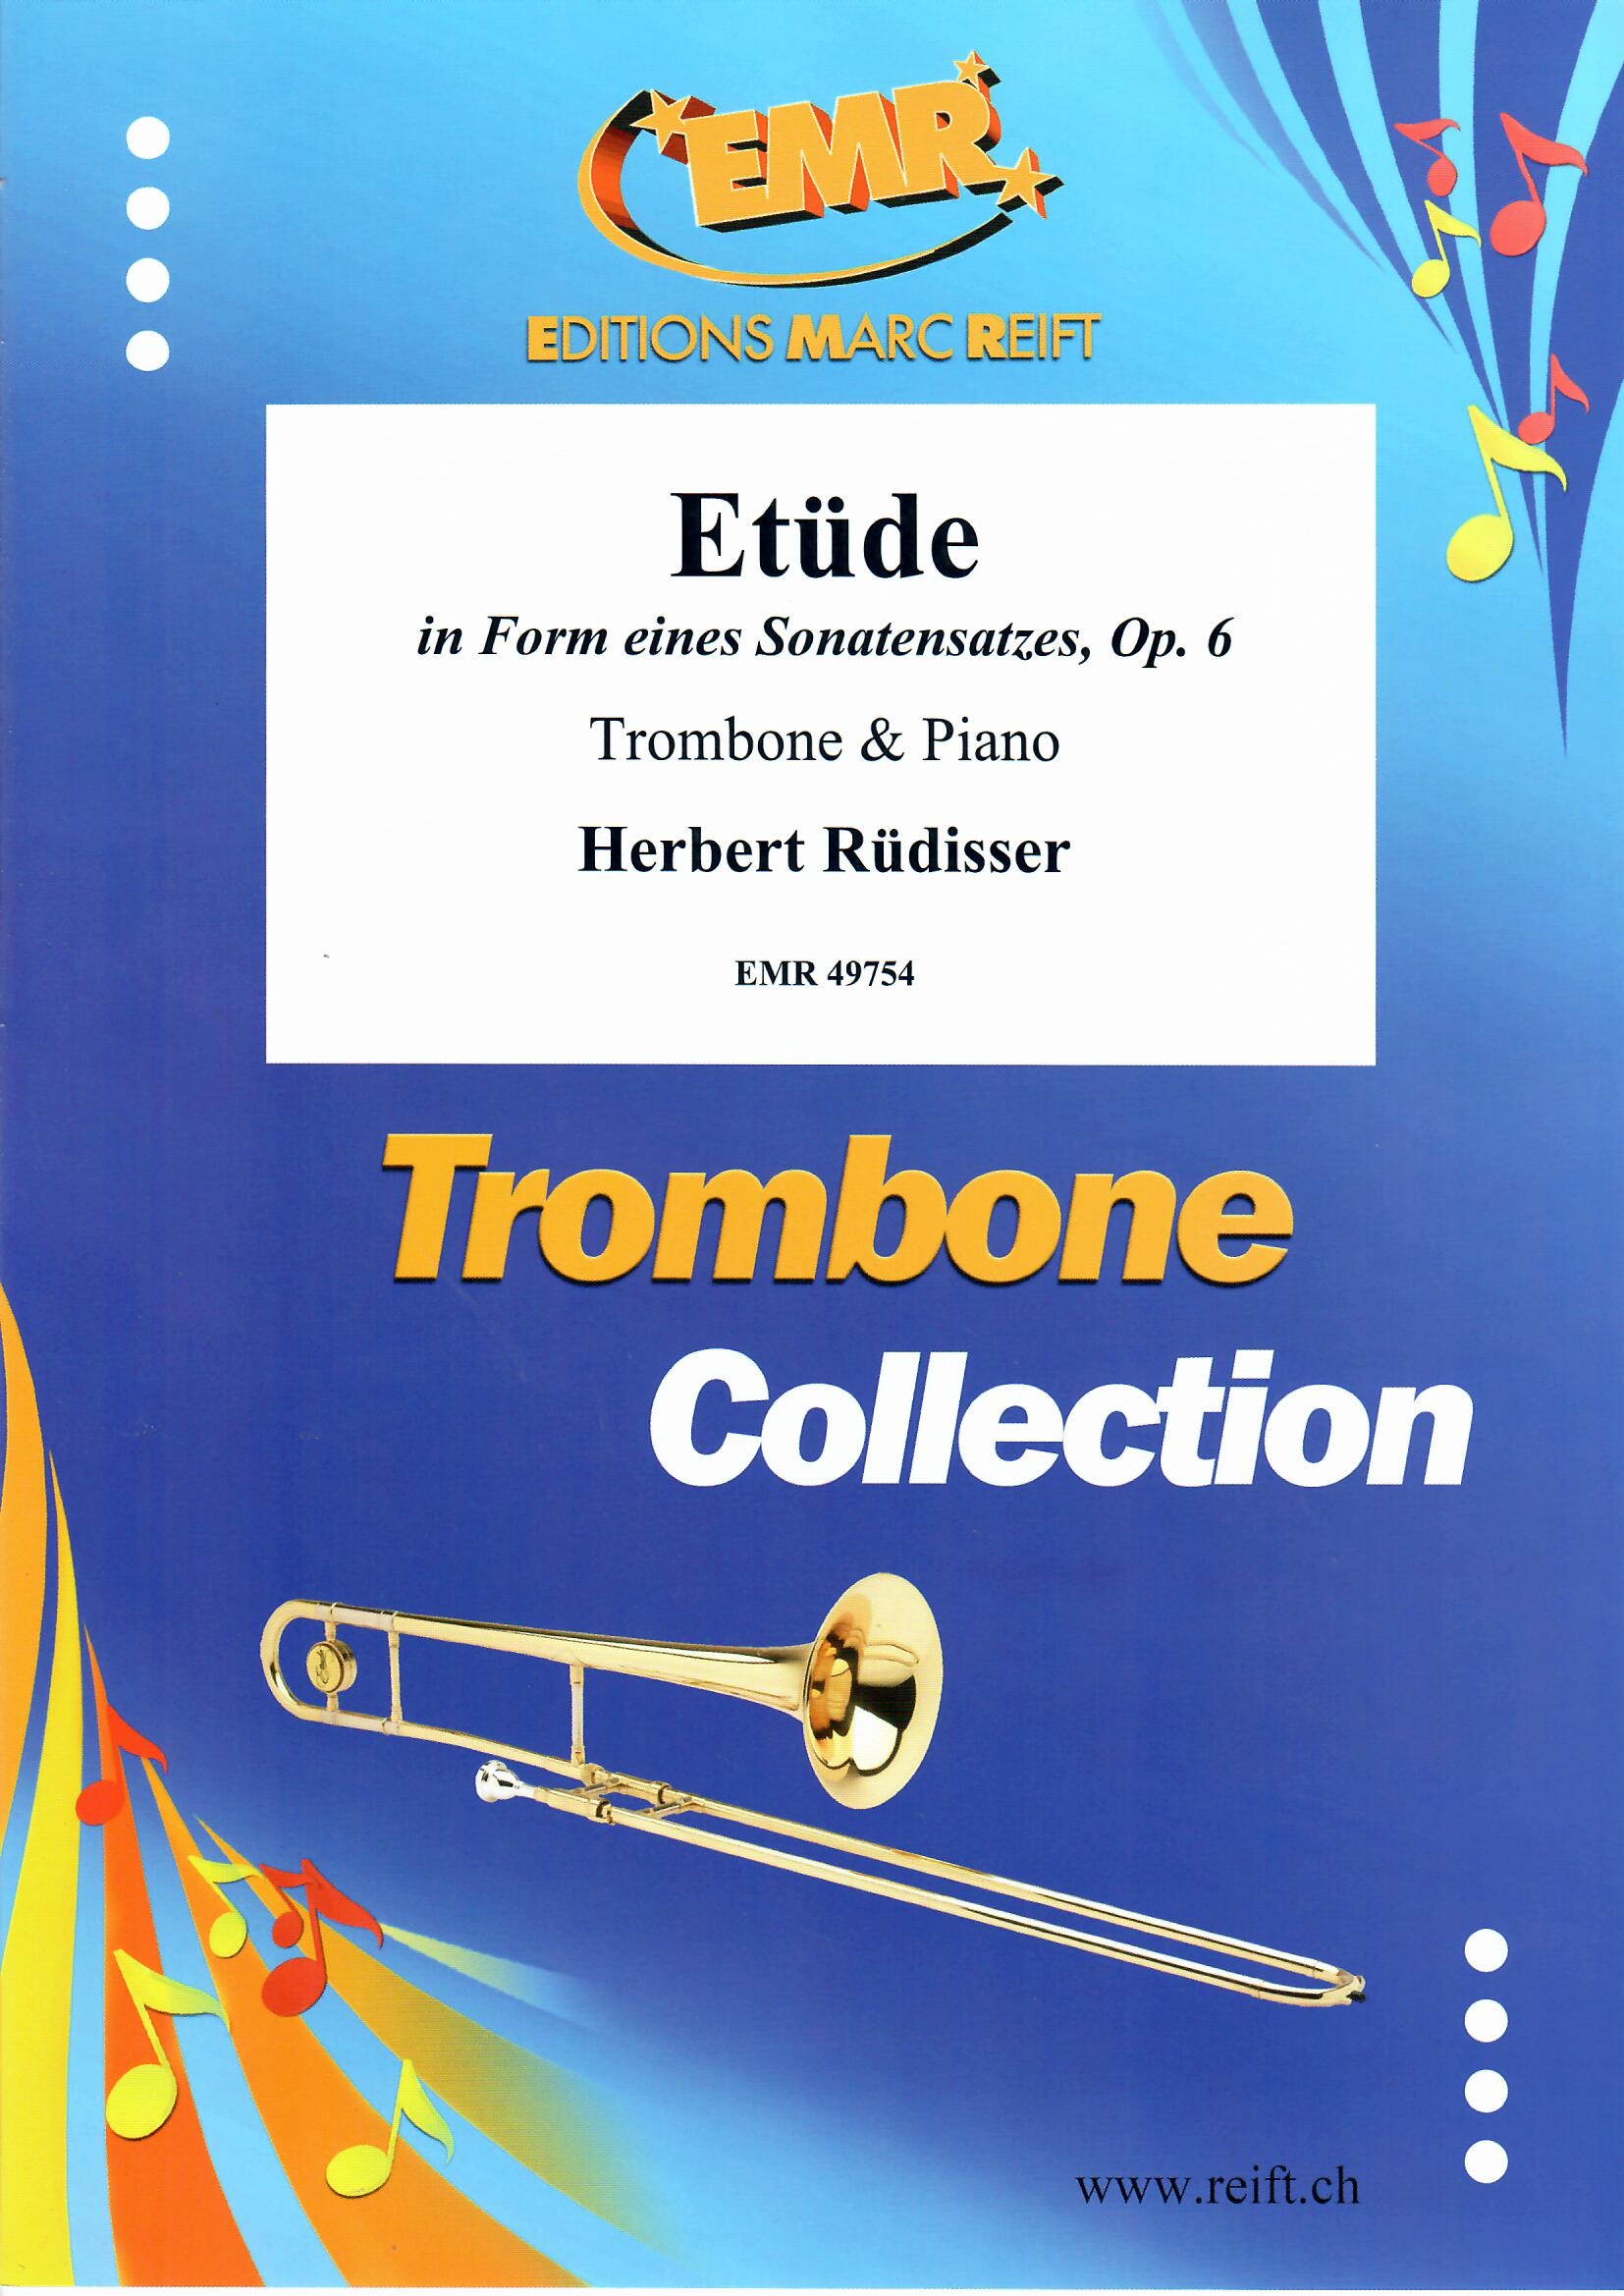 ETüDE - Trombone & Piano